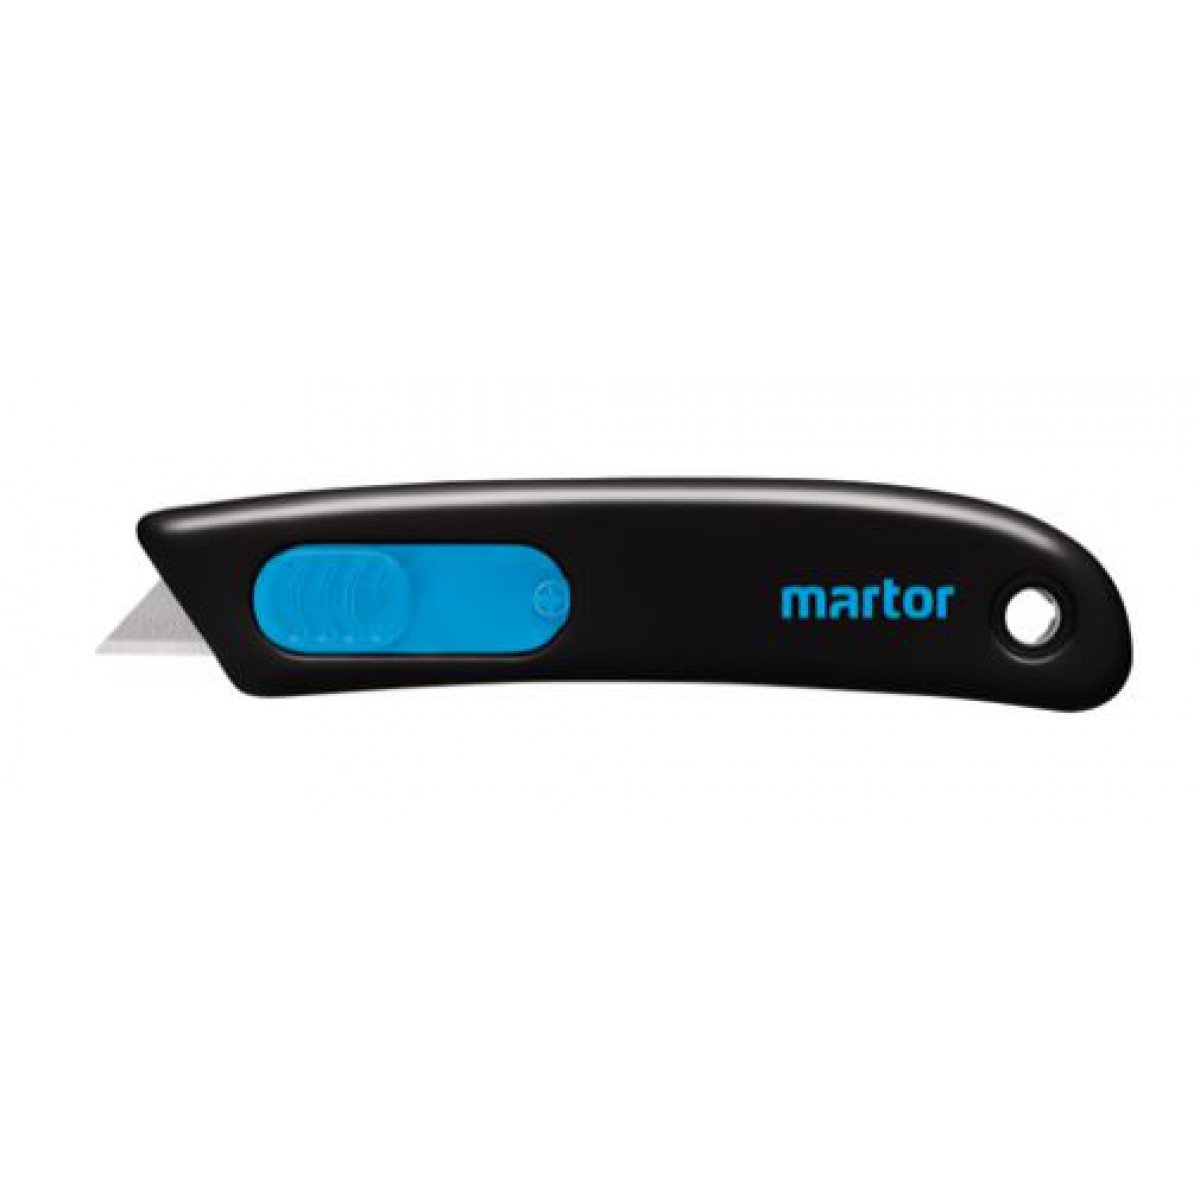 Martor Secunorm Smartcut Knife Black/Blue 110x12.5x25mm